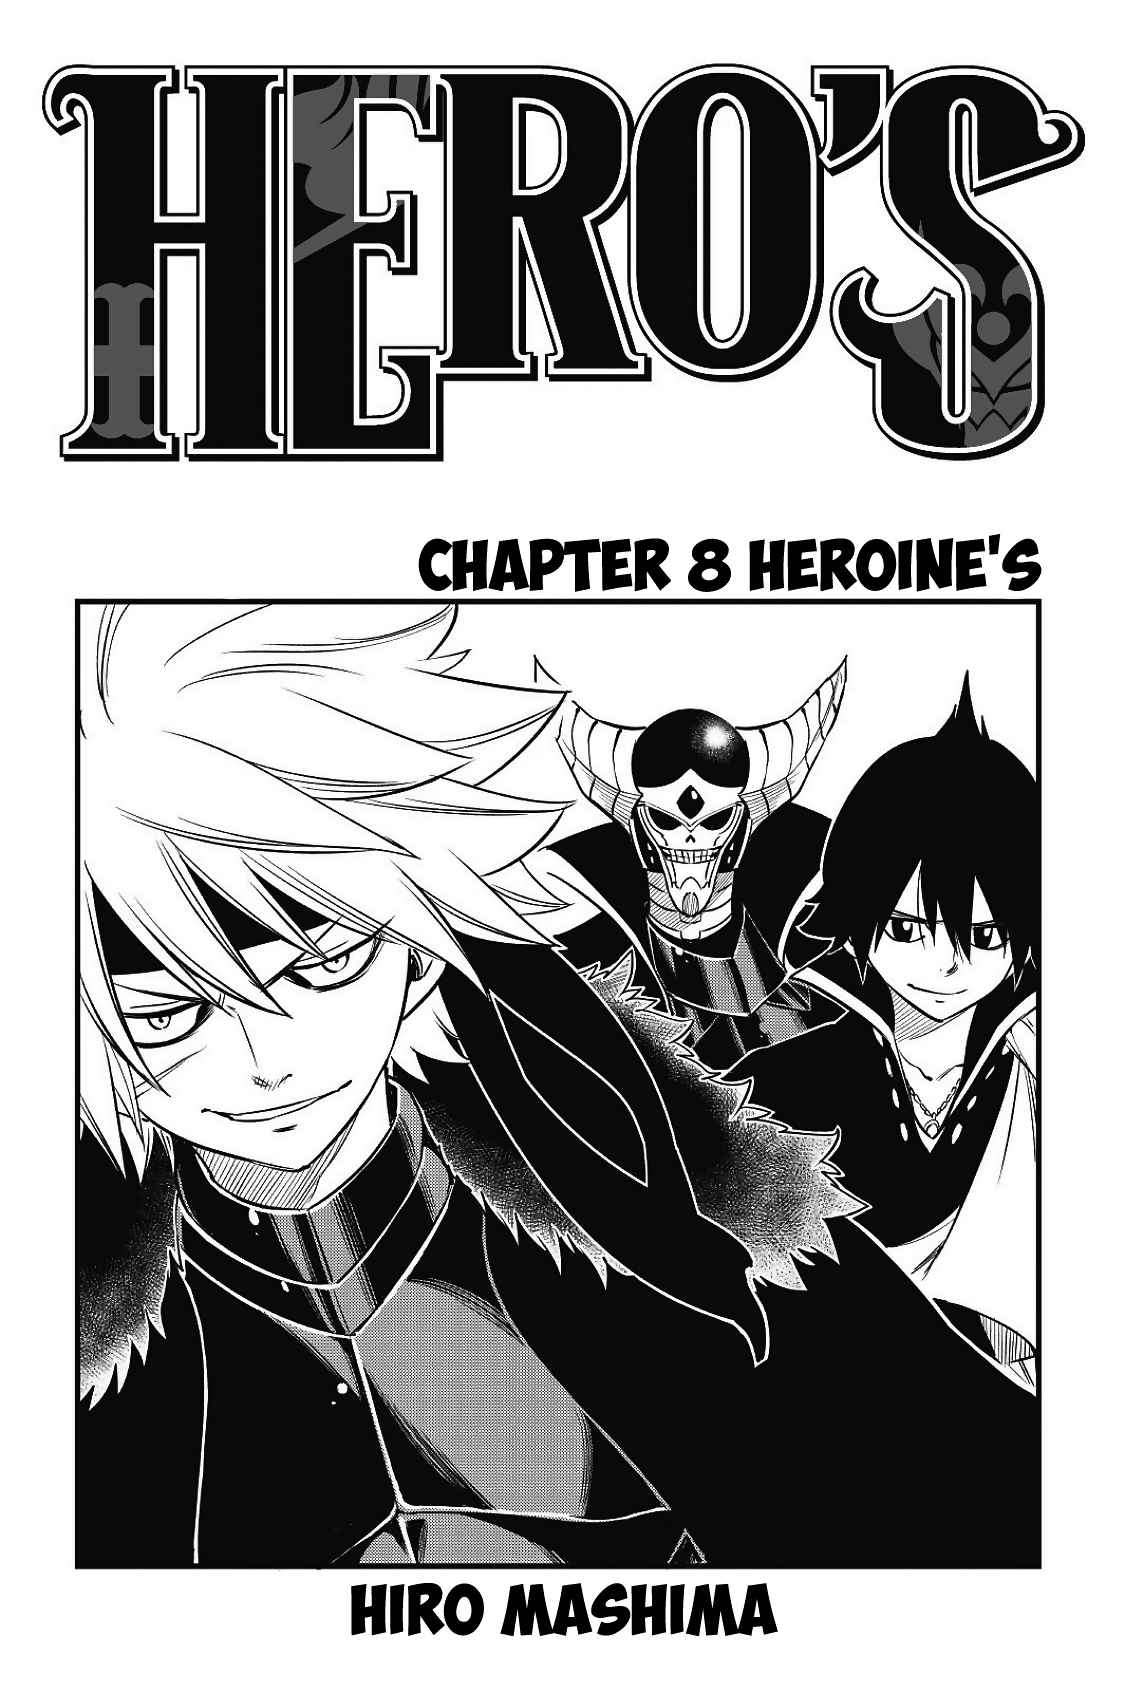 Hero's Ch. 8 Heroine's